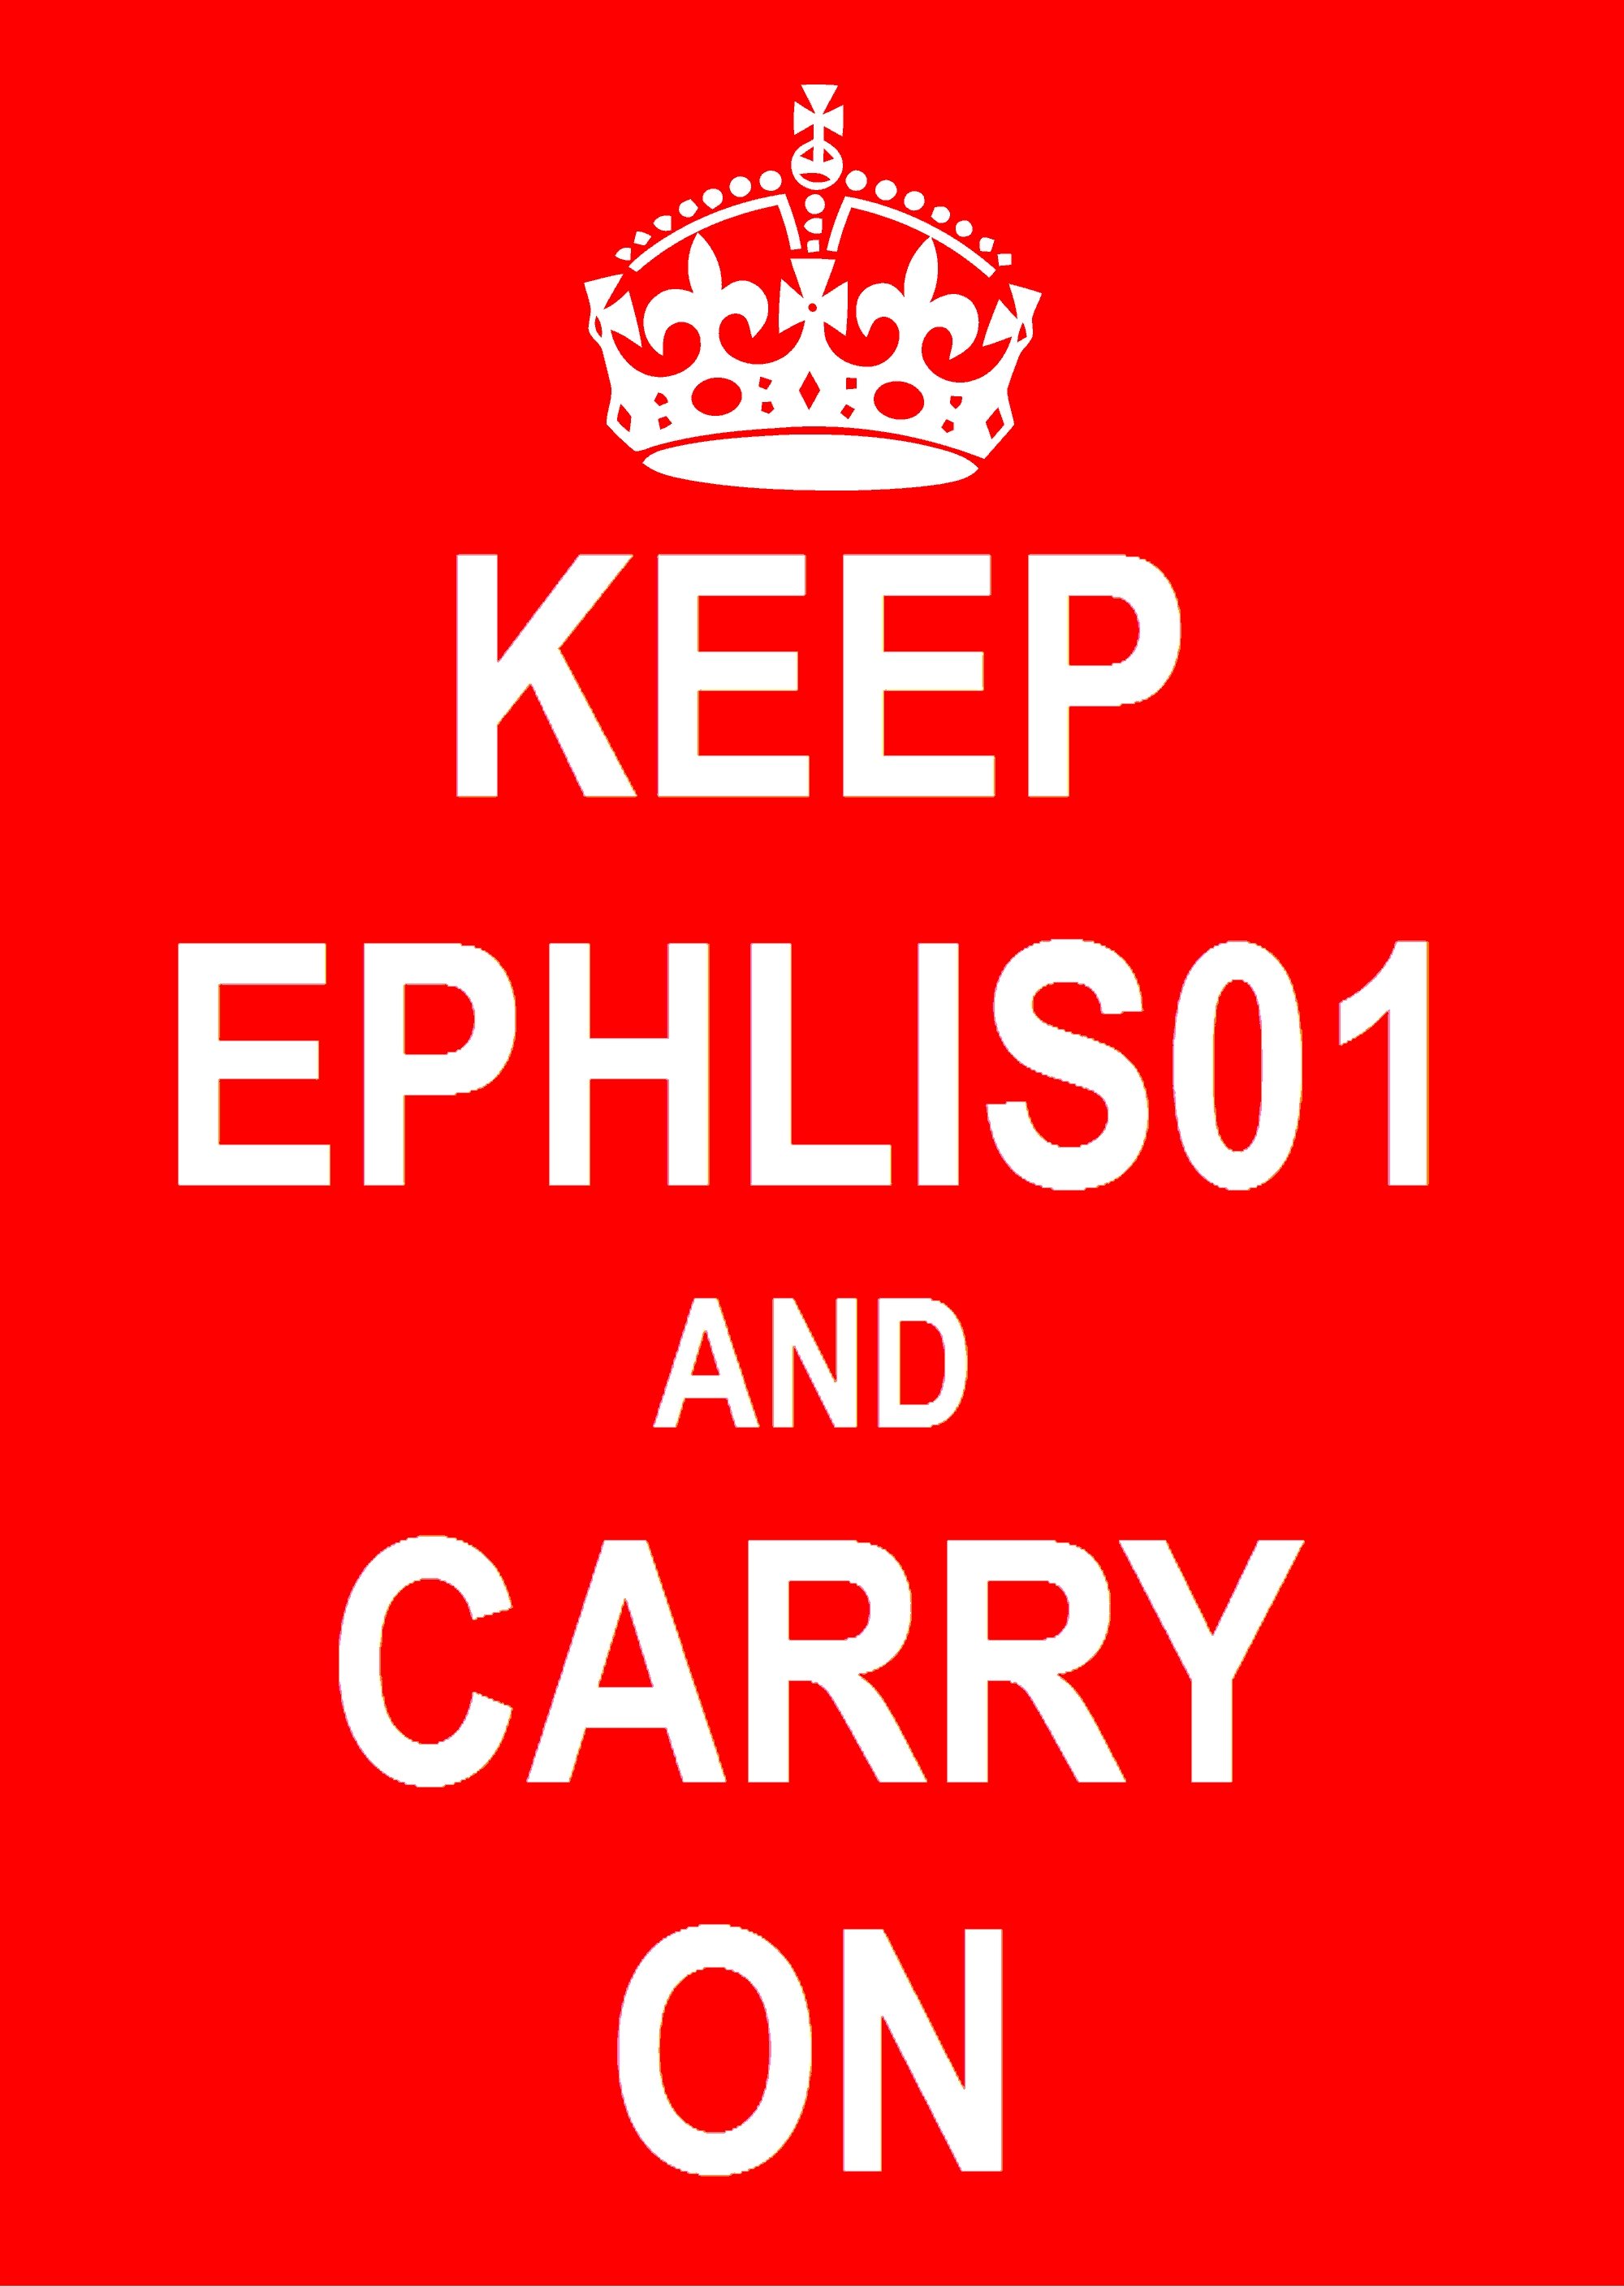 KEEP EPHLIS01 AND CARRY ON.JPG